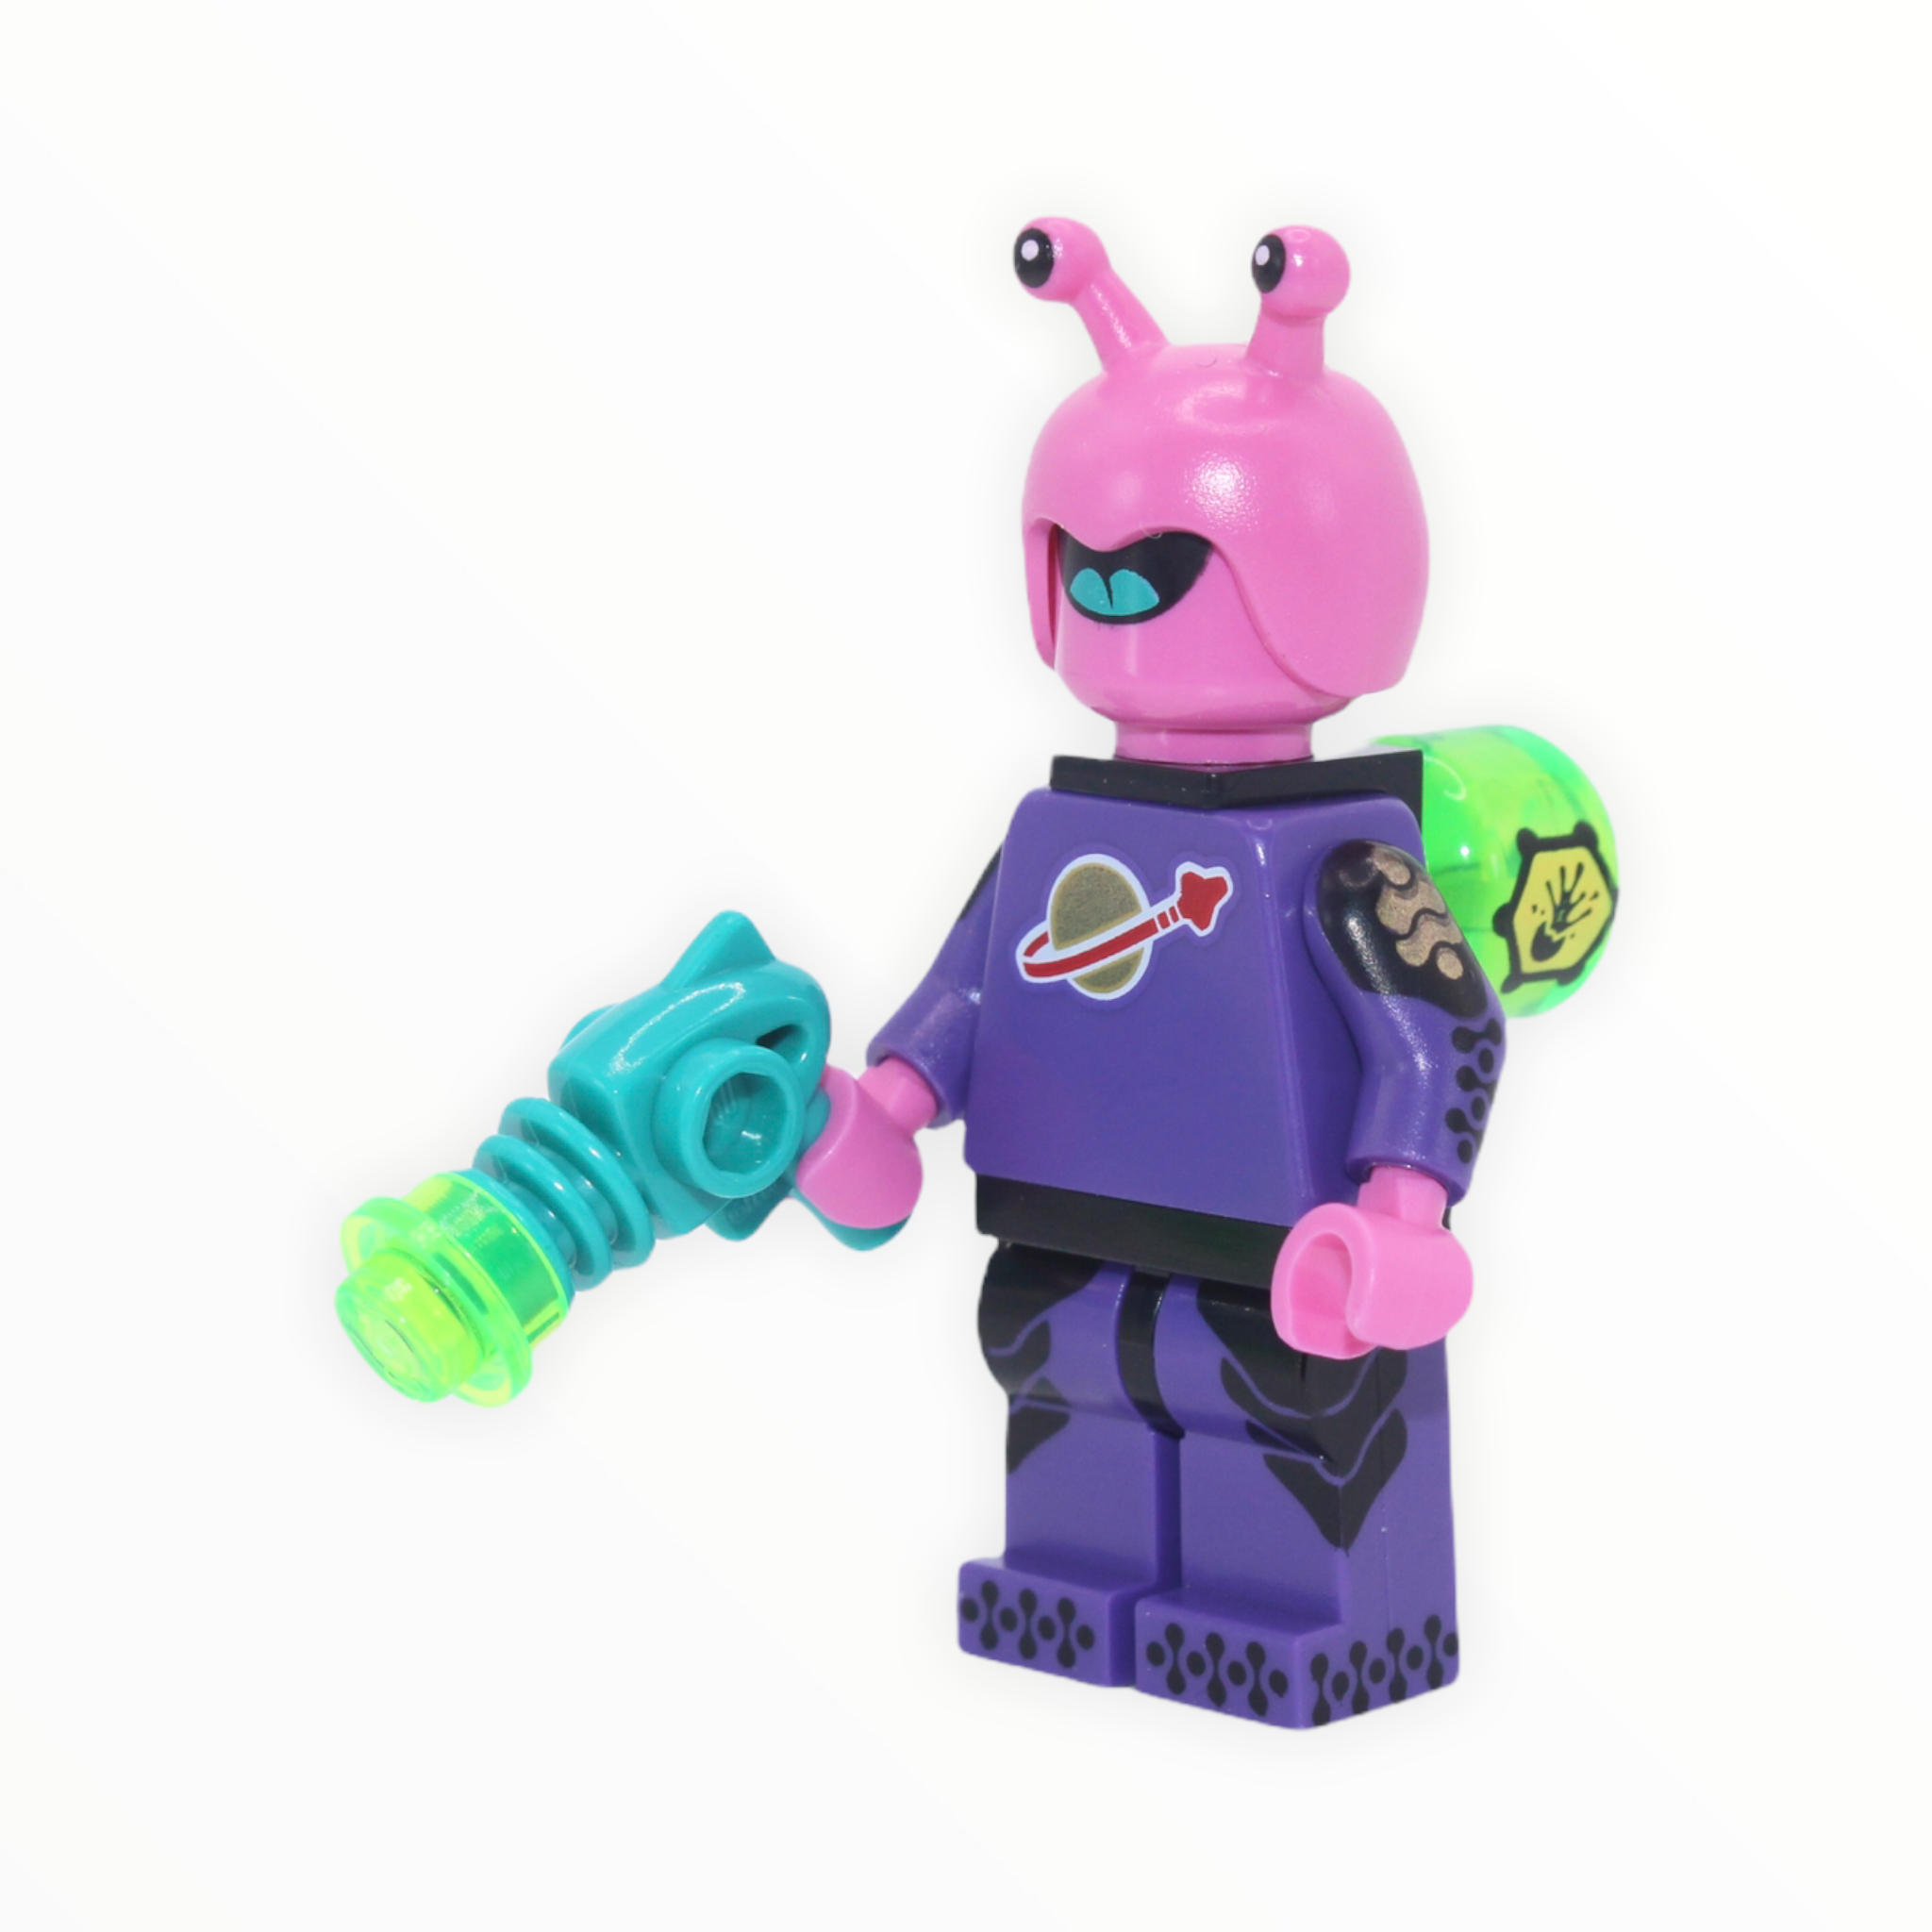 LEGO Series 22: Space Creature